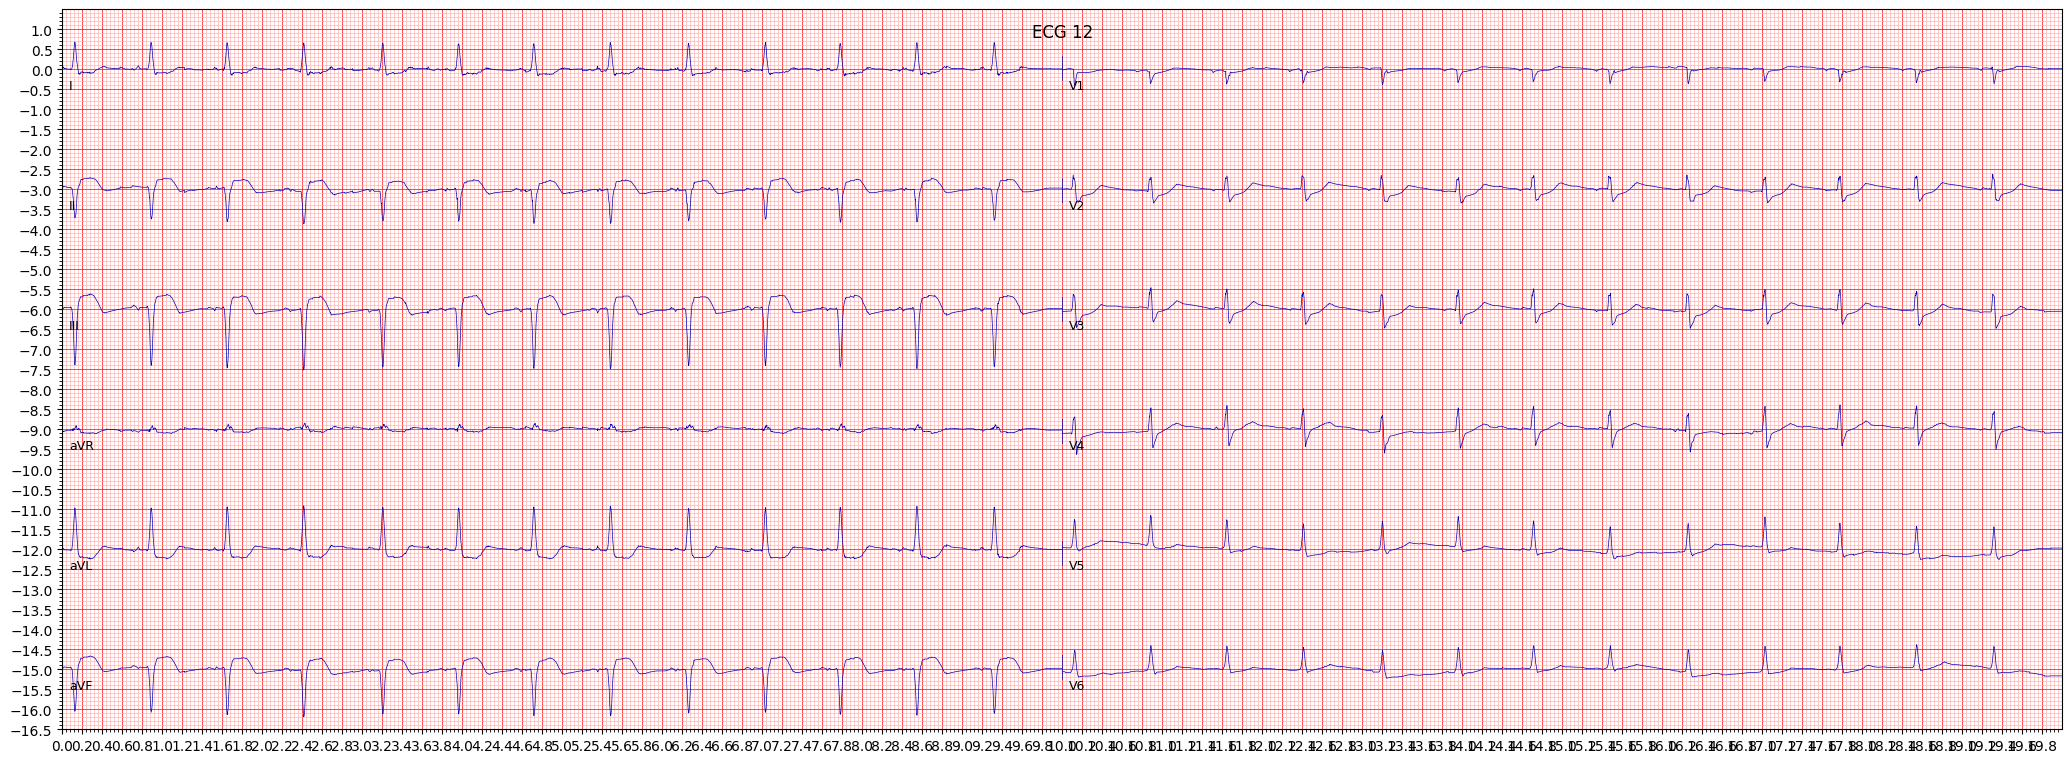 inferior myocardial infarction (IMI) example 532